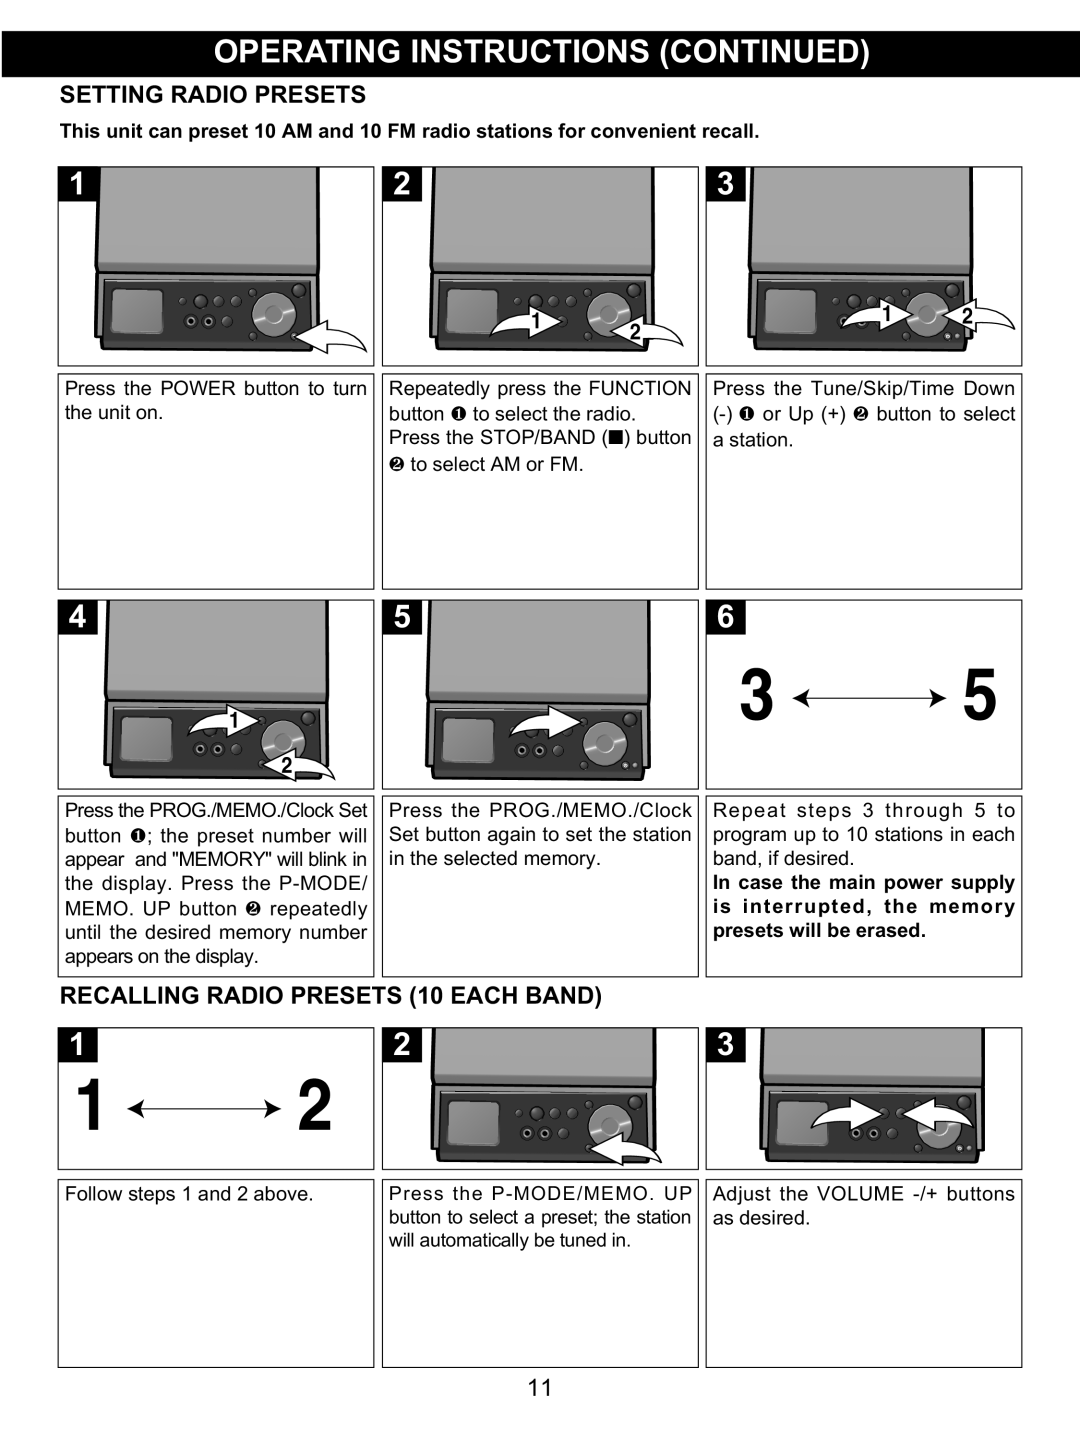 Memorex MX4139 manual Operating Instructions Continued, Setting Radio Presets, RECALLING RADIO PRESETS 10 EACH BAND 